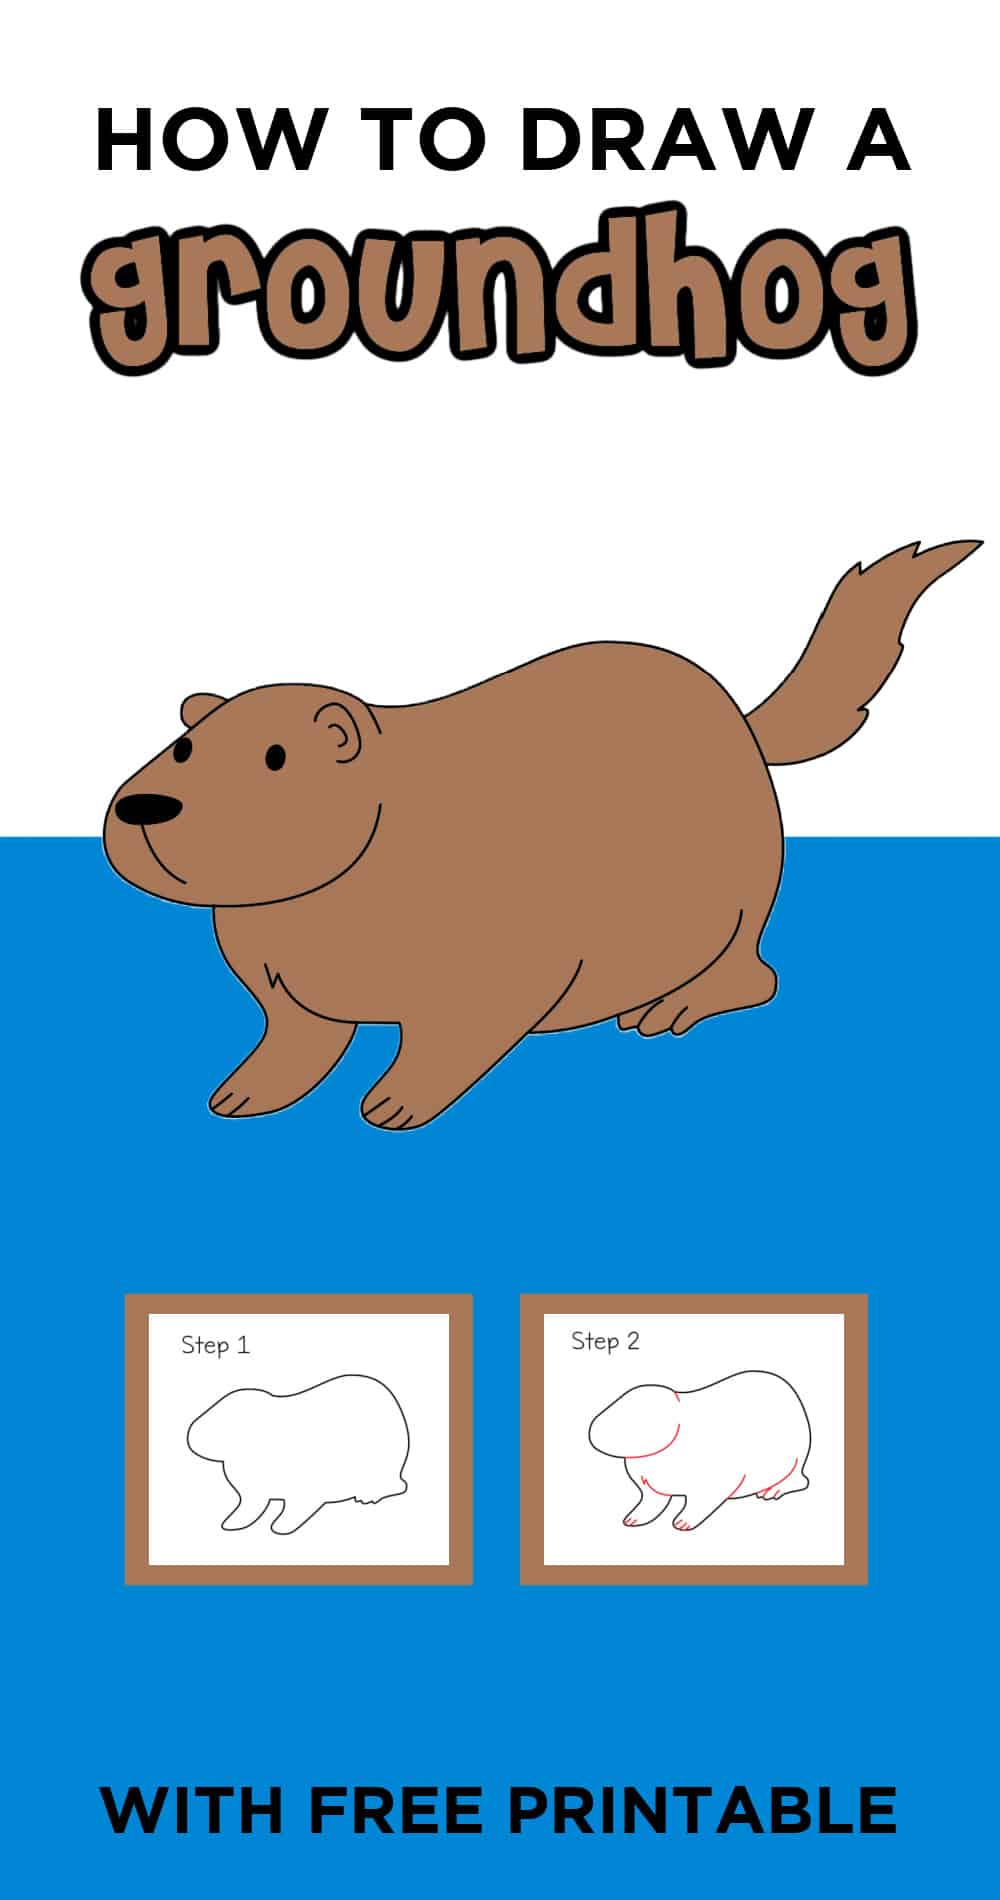 draw a groundhog